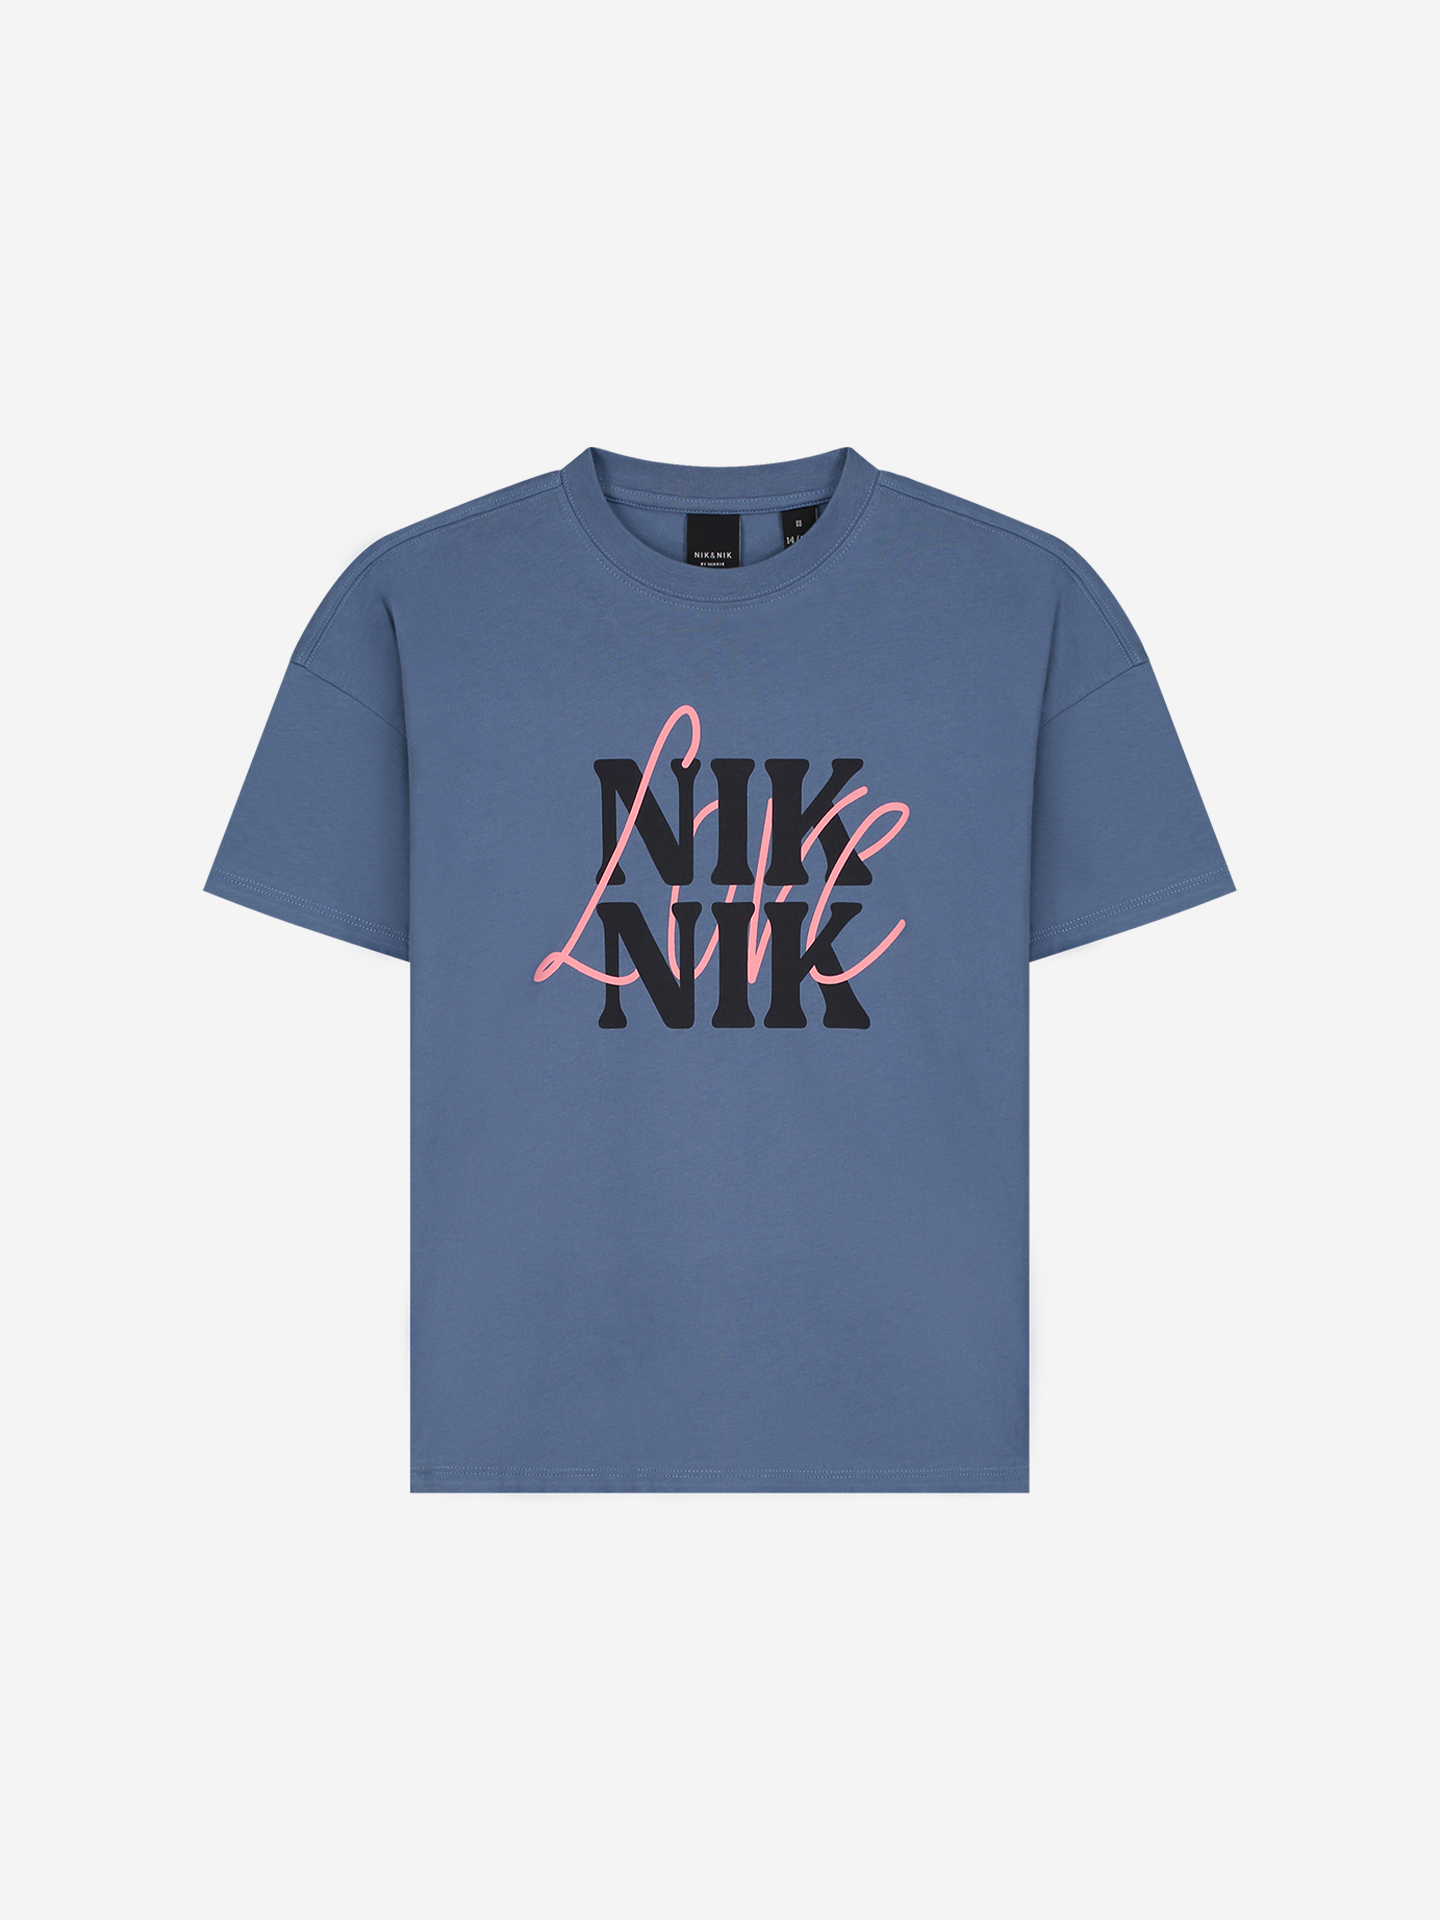 NIKNIK love t-shirt